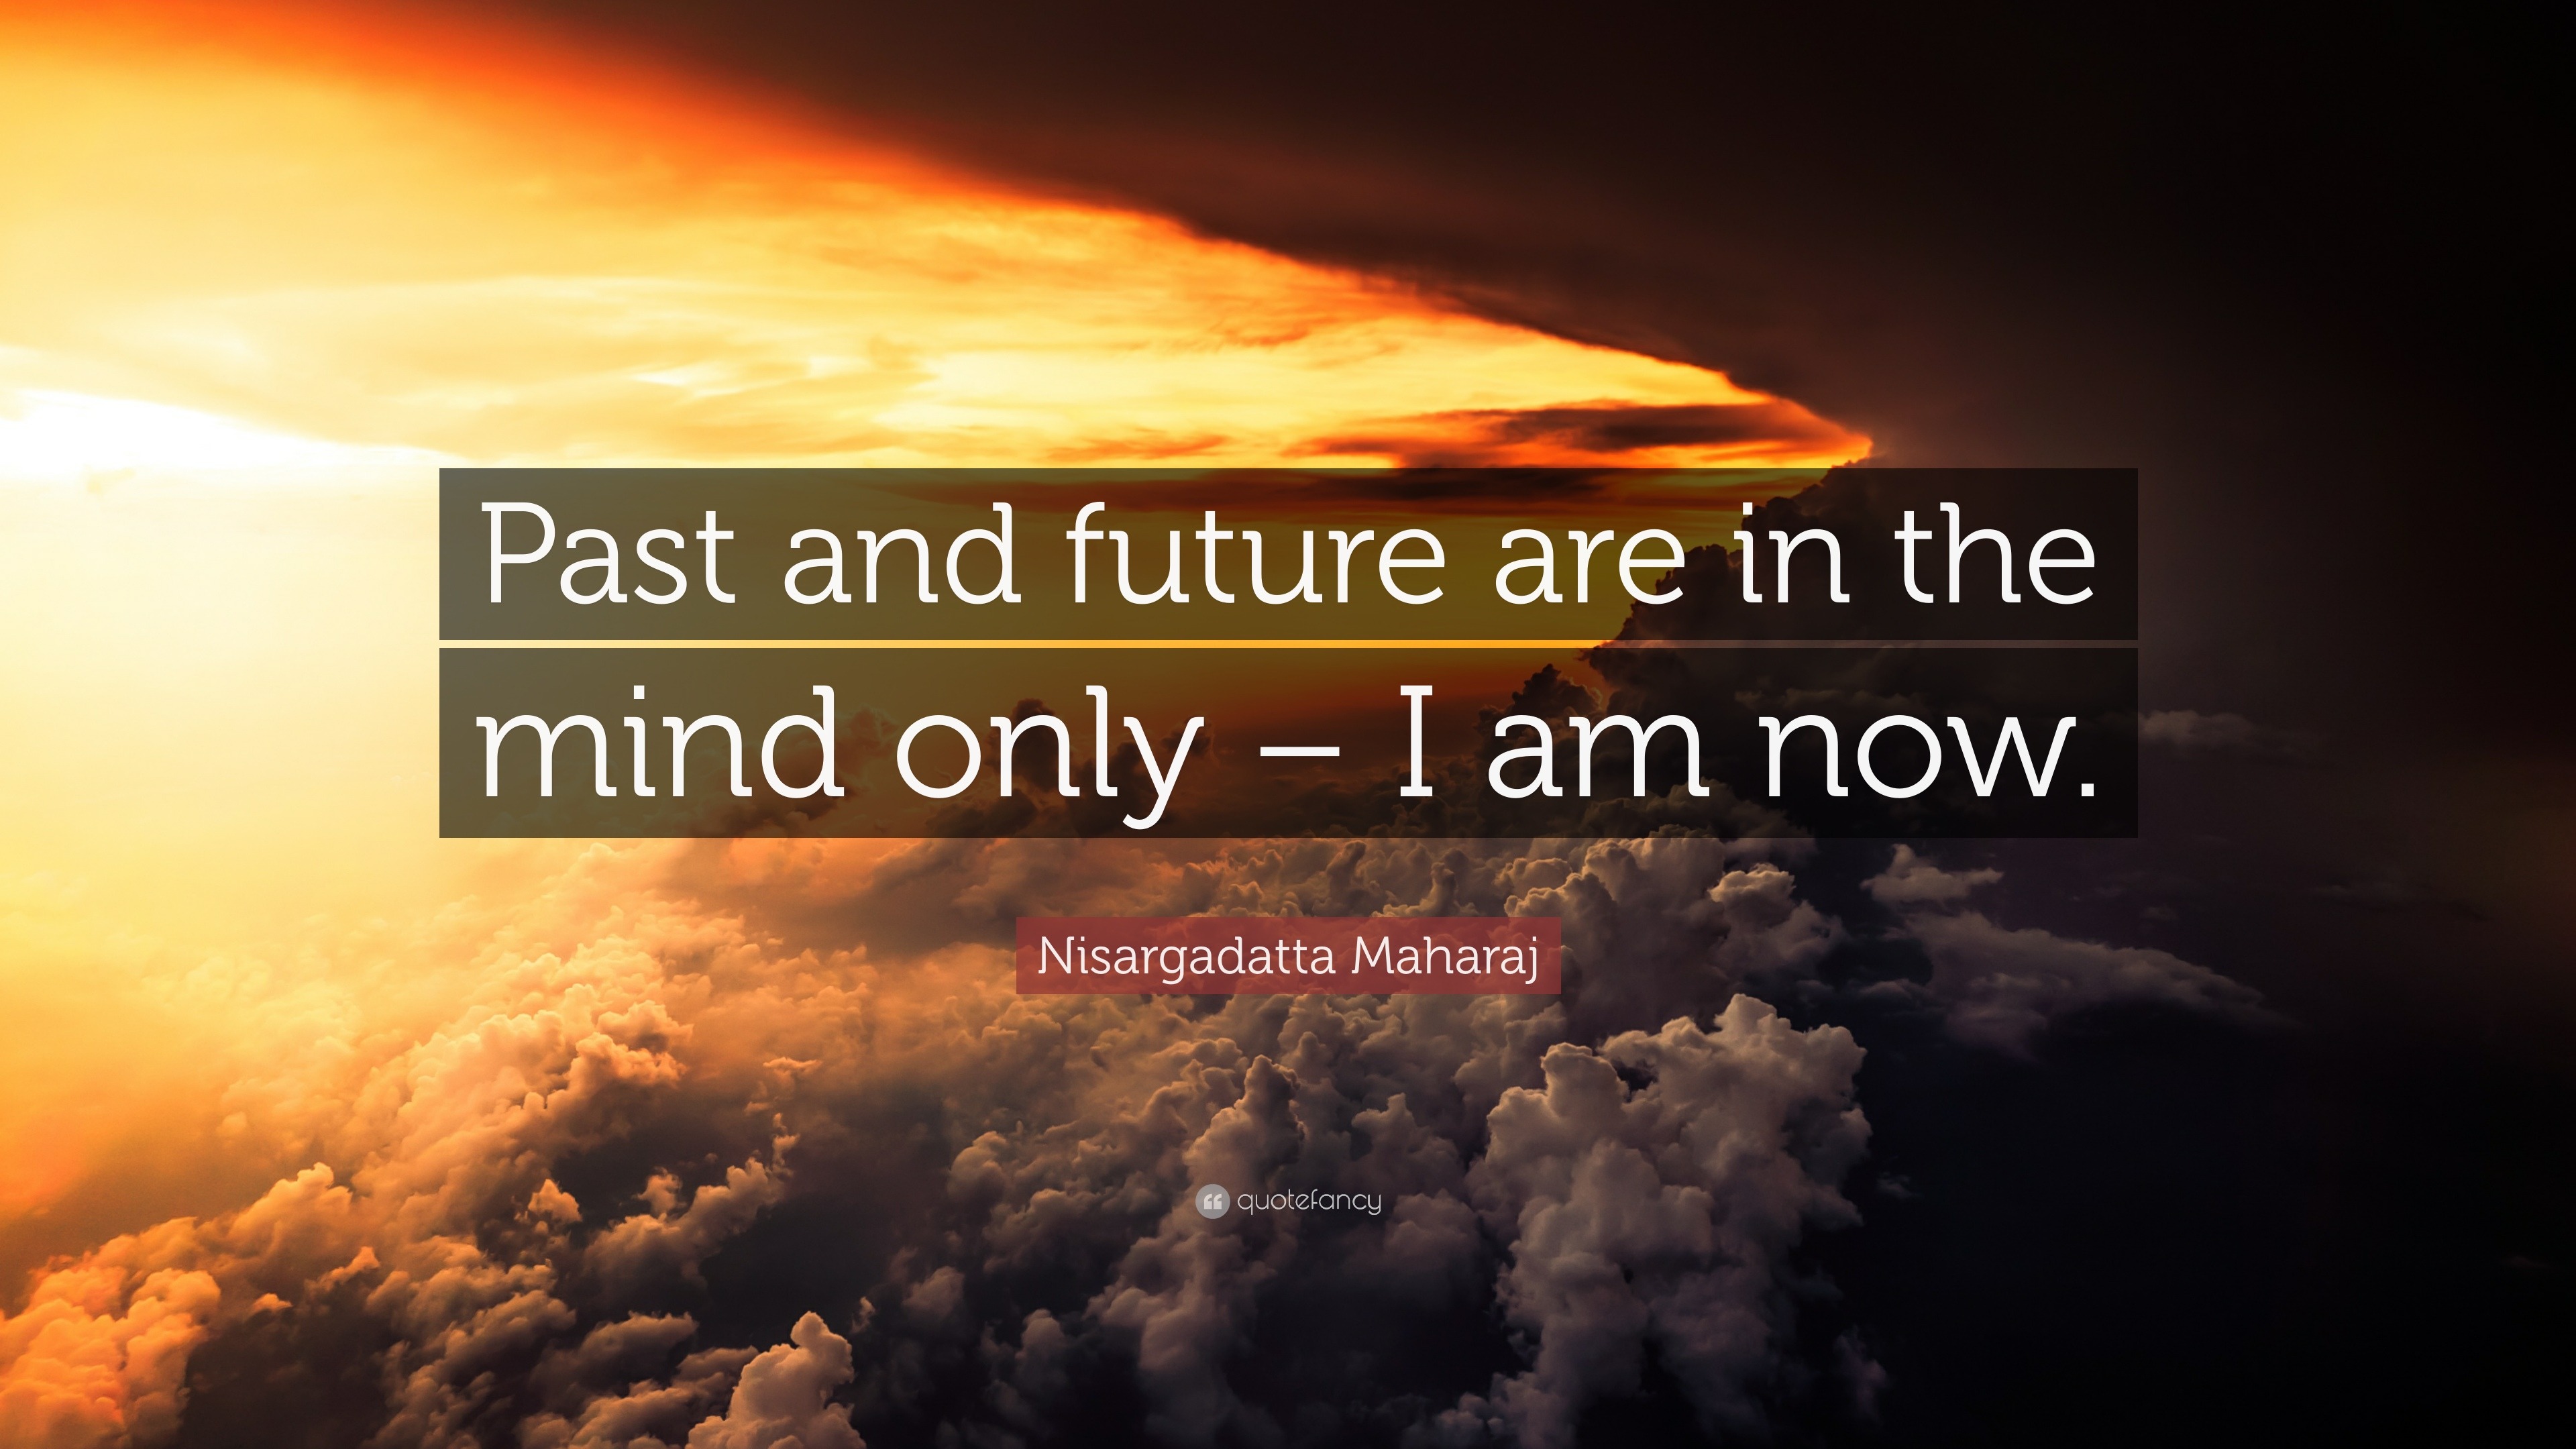 Nisargadatta Maharaj Quote: "Past and future are in the ...